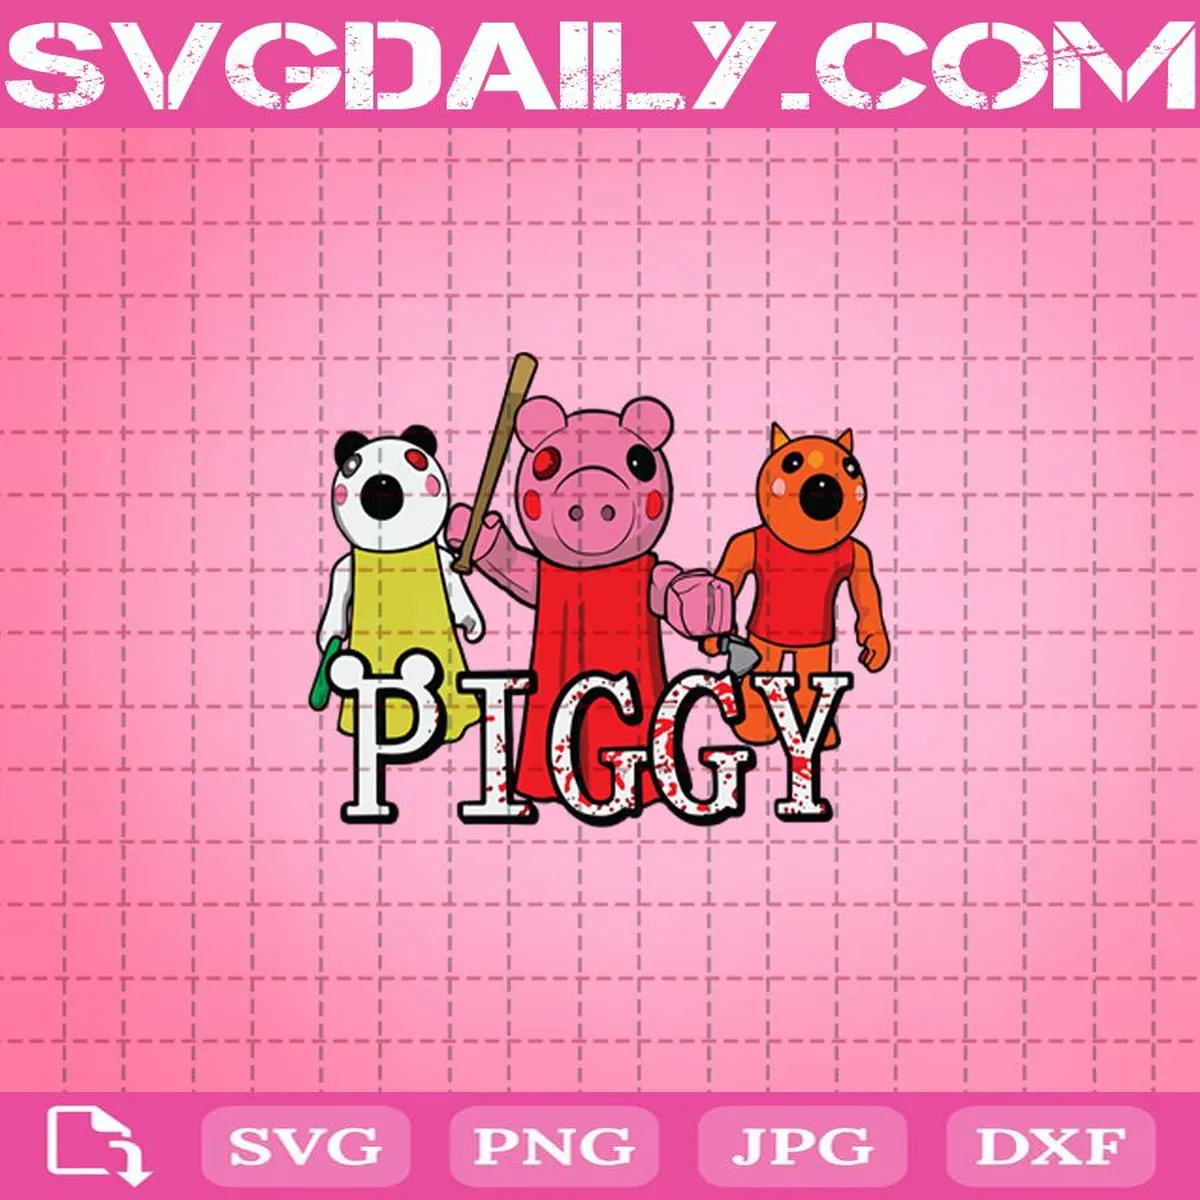 Piggy Roblox Svg, Roblox Game Svg, Roblox Characters Svg, Piggy Svg, Piggy Horror Roblox Svg, Roblox Game Svg Cut File